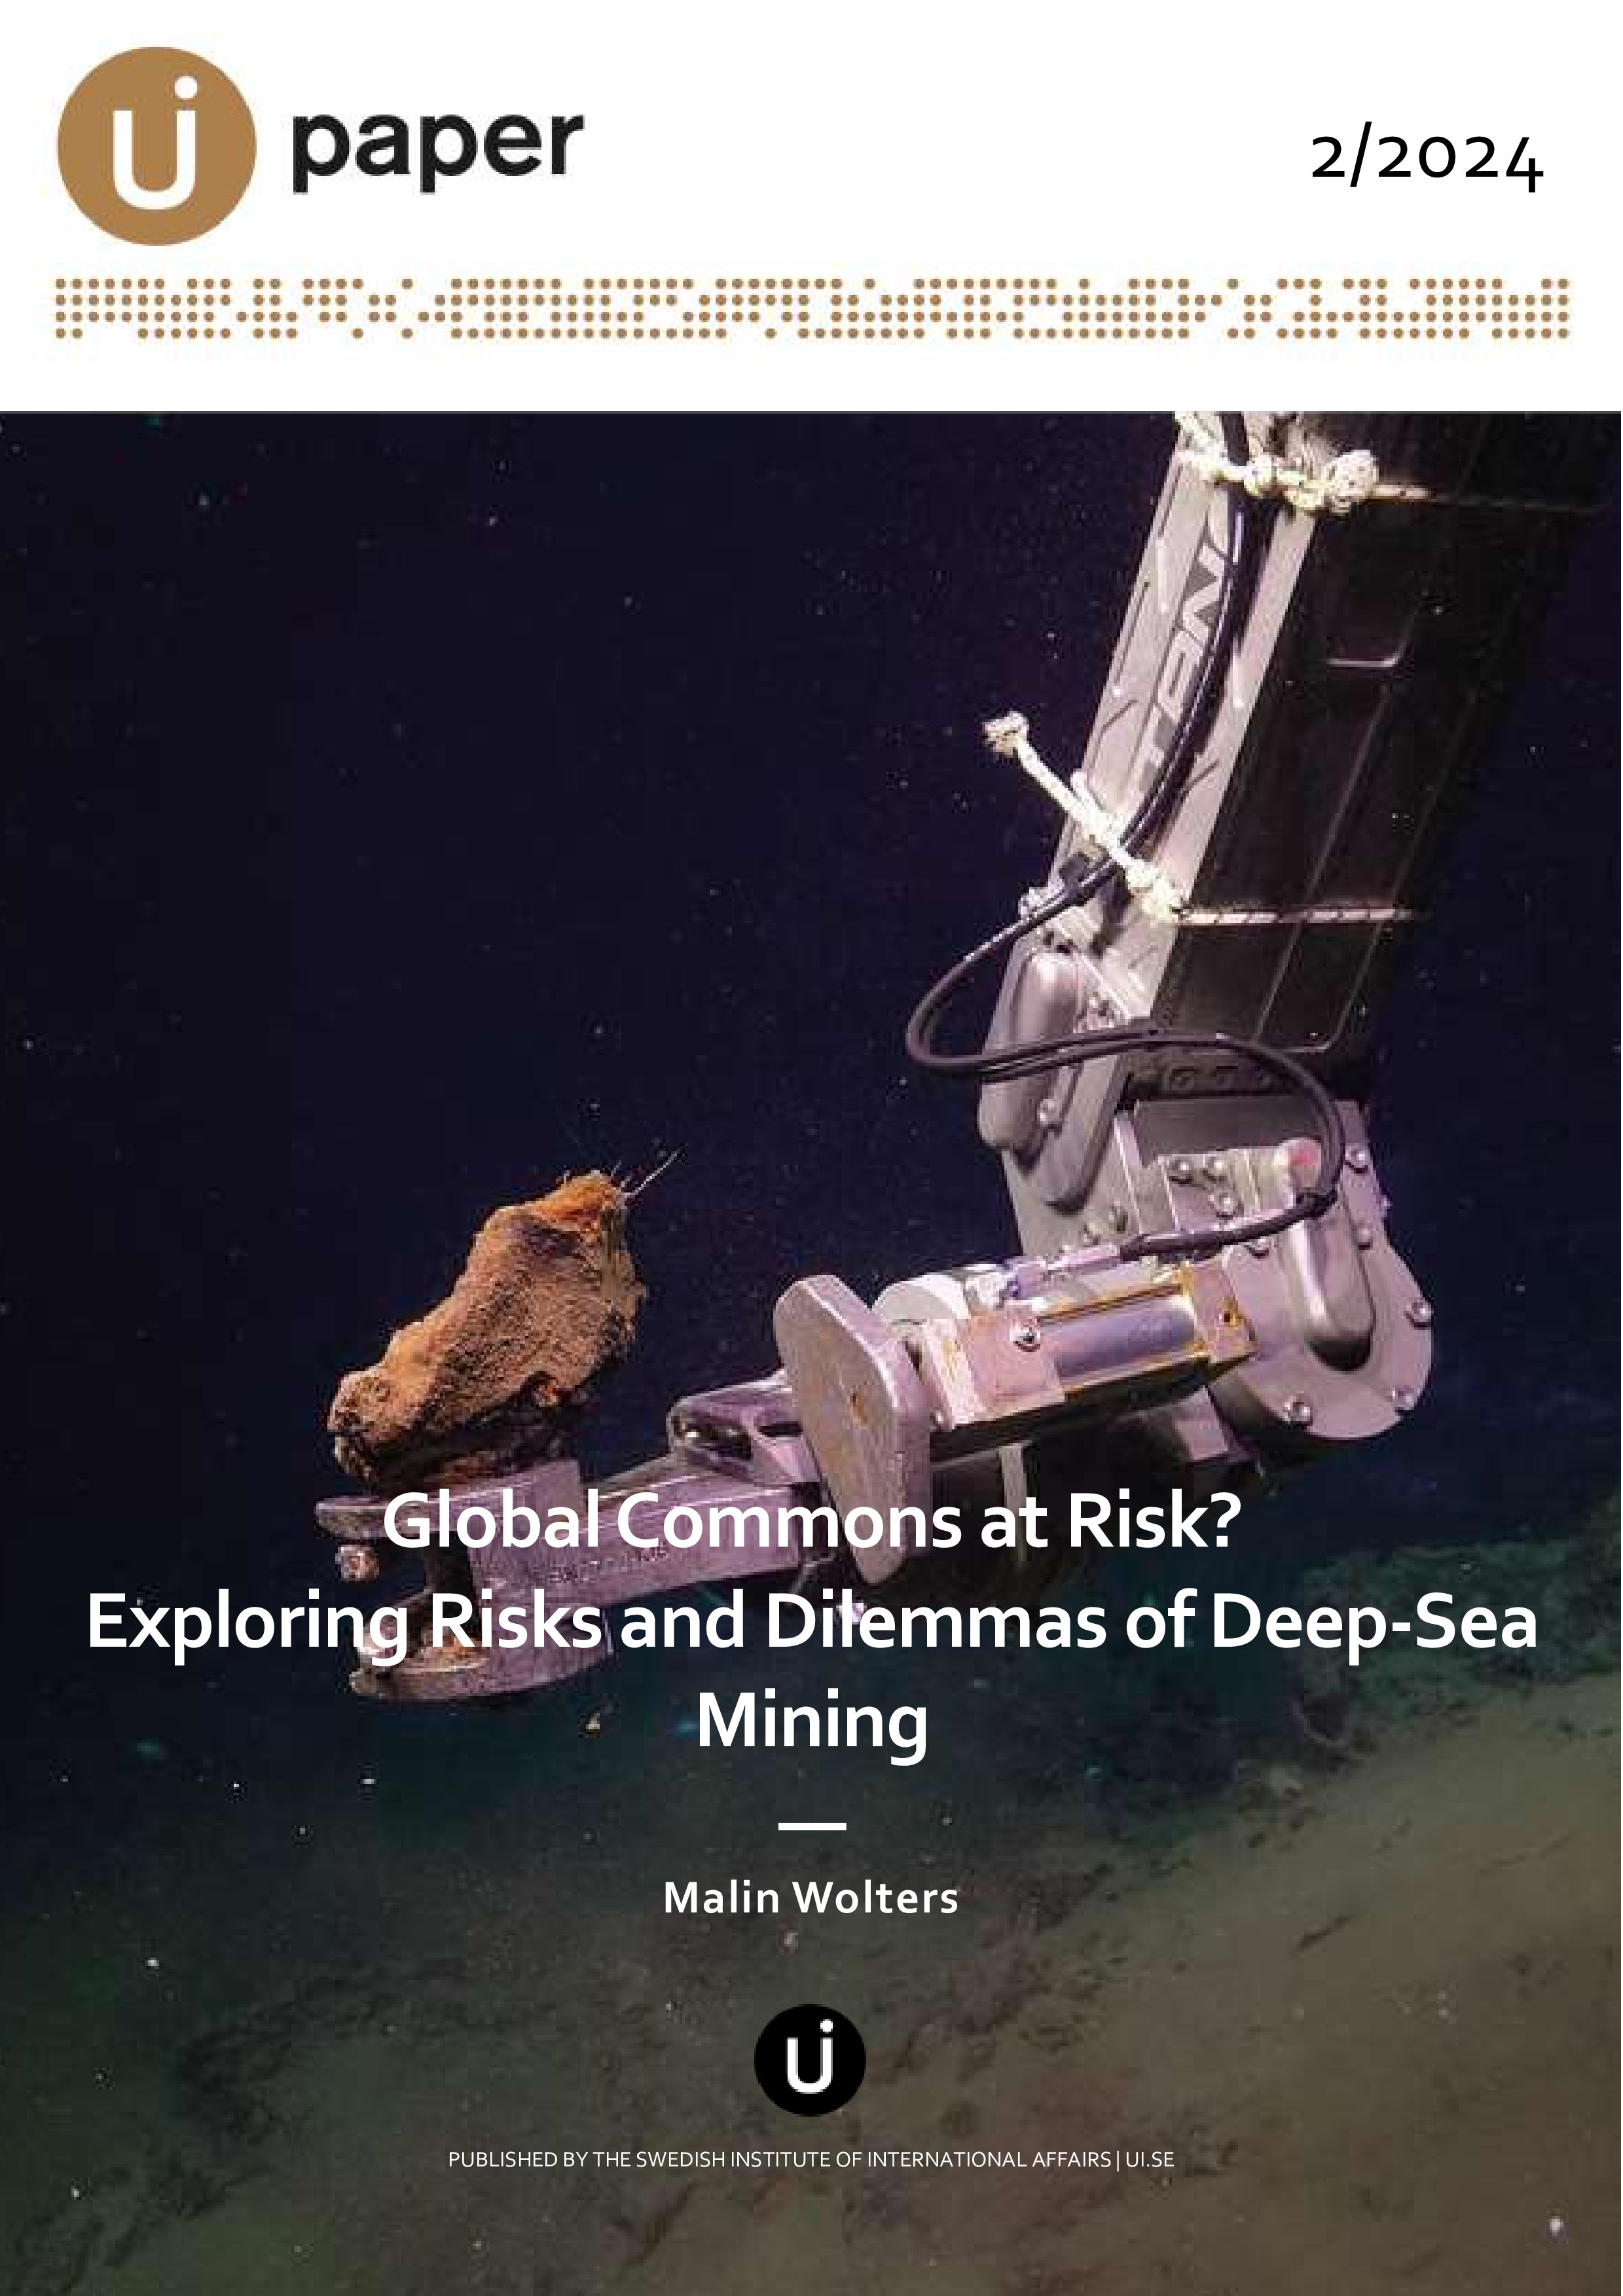 Global Commons at Risk? Exploring Risks and Dilemmas of Deep-Sea Mining